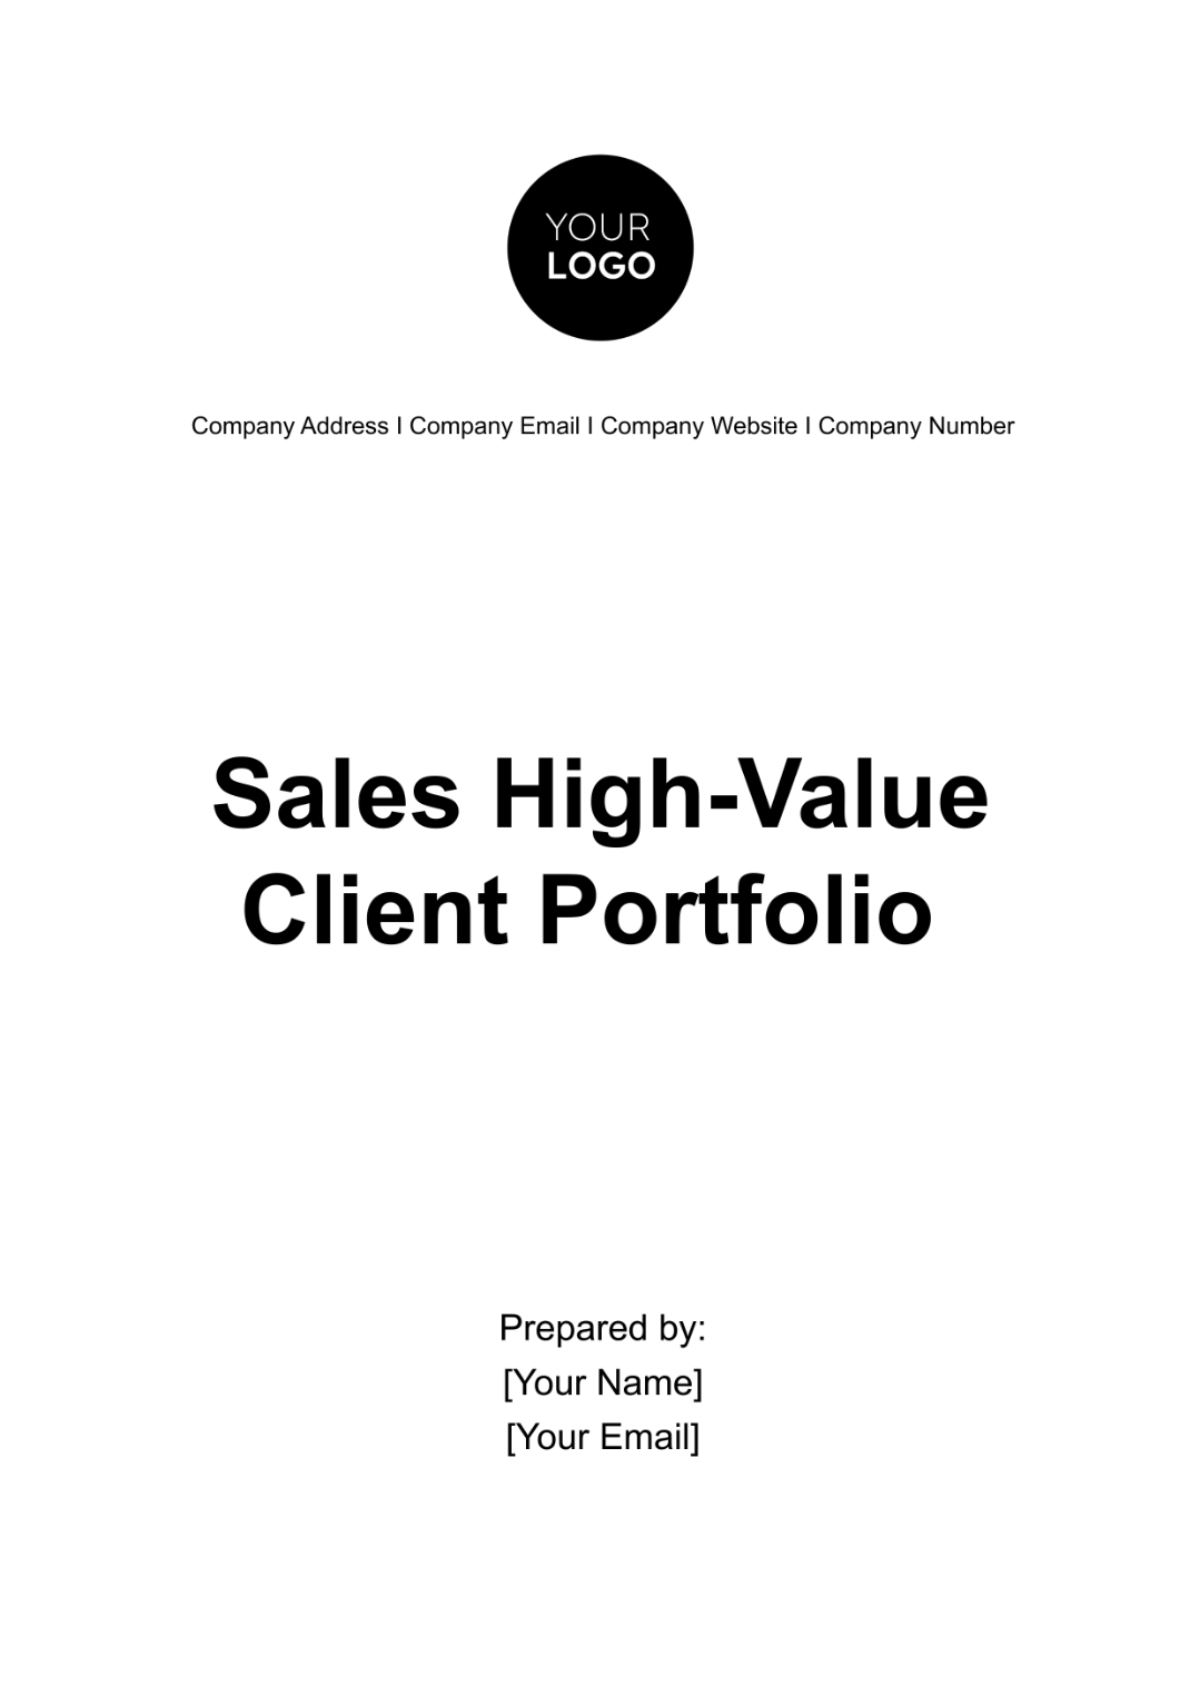 Free Sales High-Value Client Portfolio Template